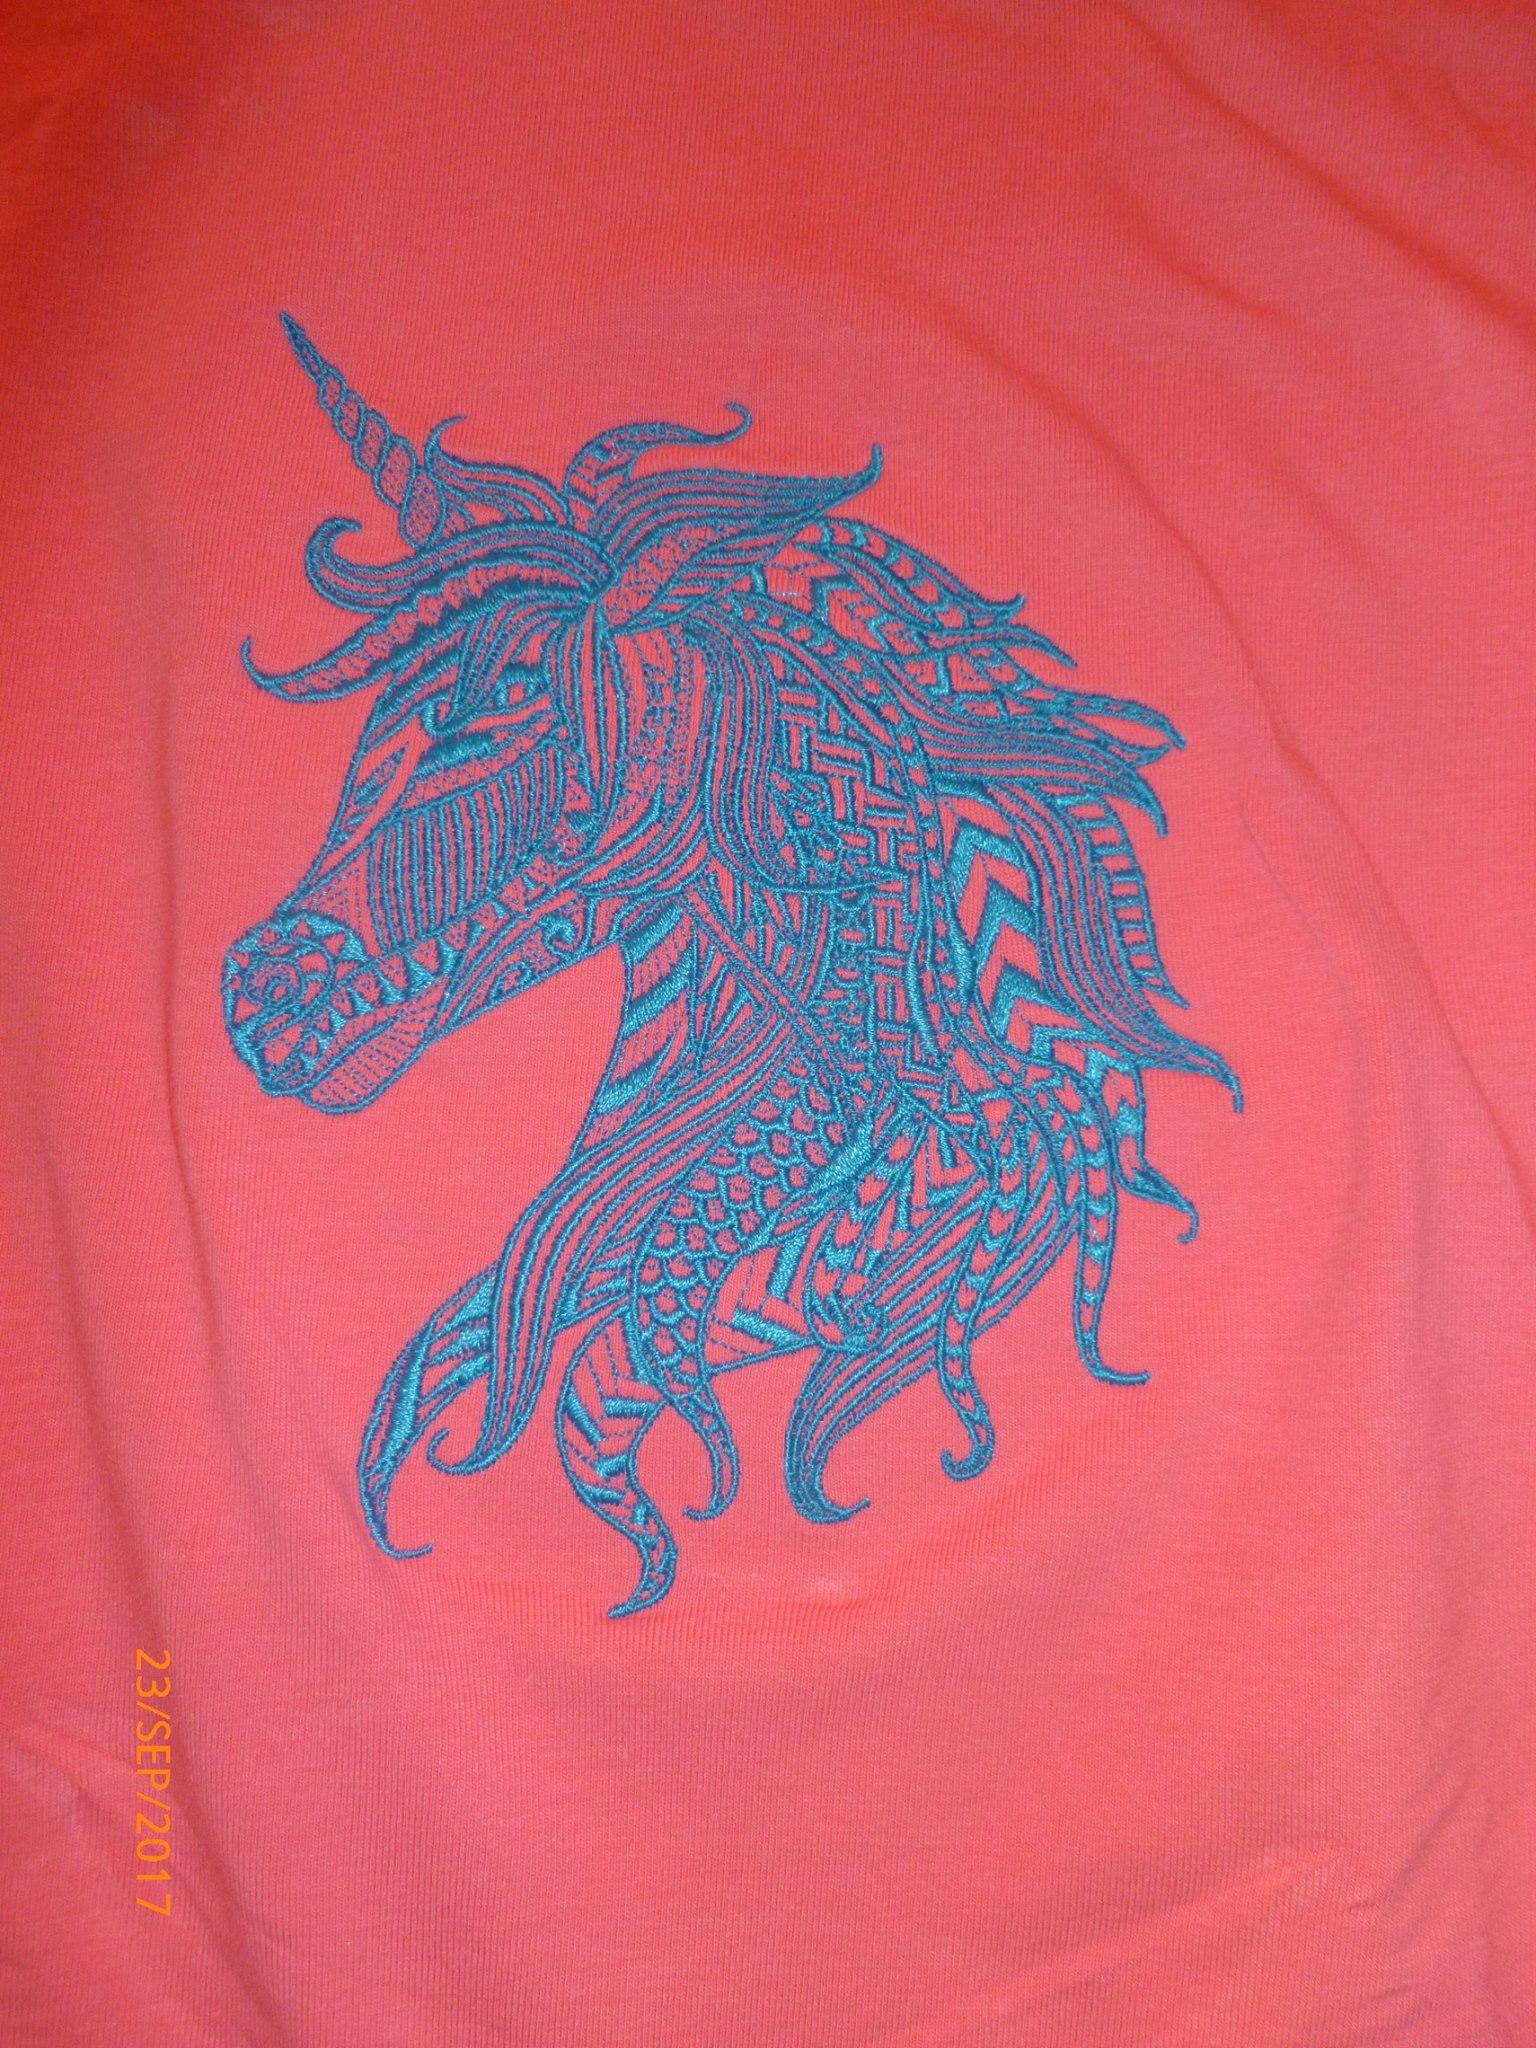 Mosaic unicorn embroidery design